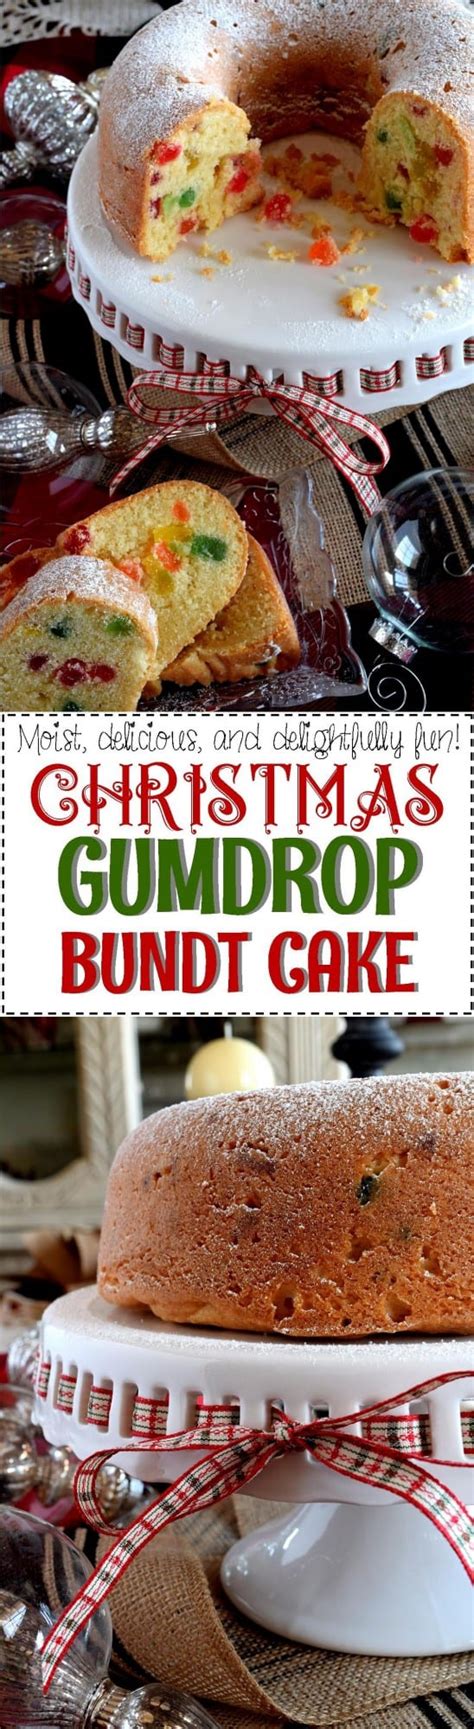 Christmas or not, bundt cake is always a good idea. Christmas Gumdrop Bundt Cake - Lord Byron's Kitchen